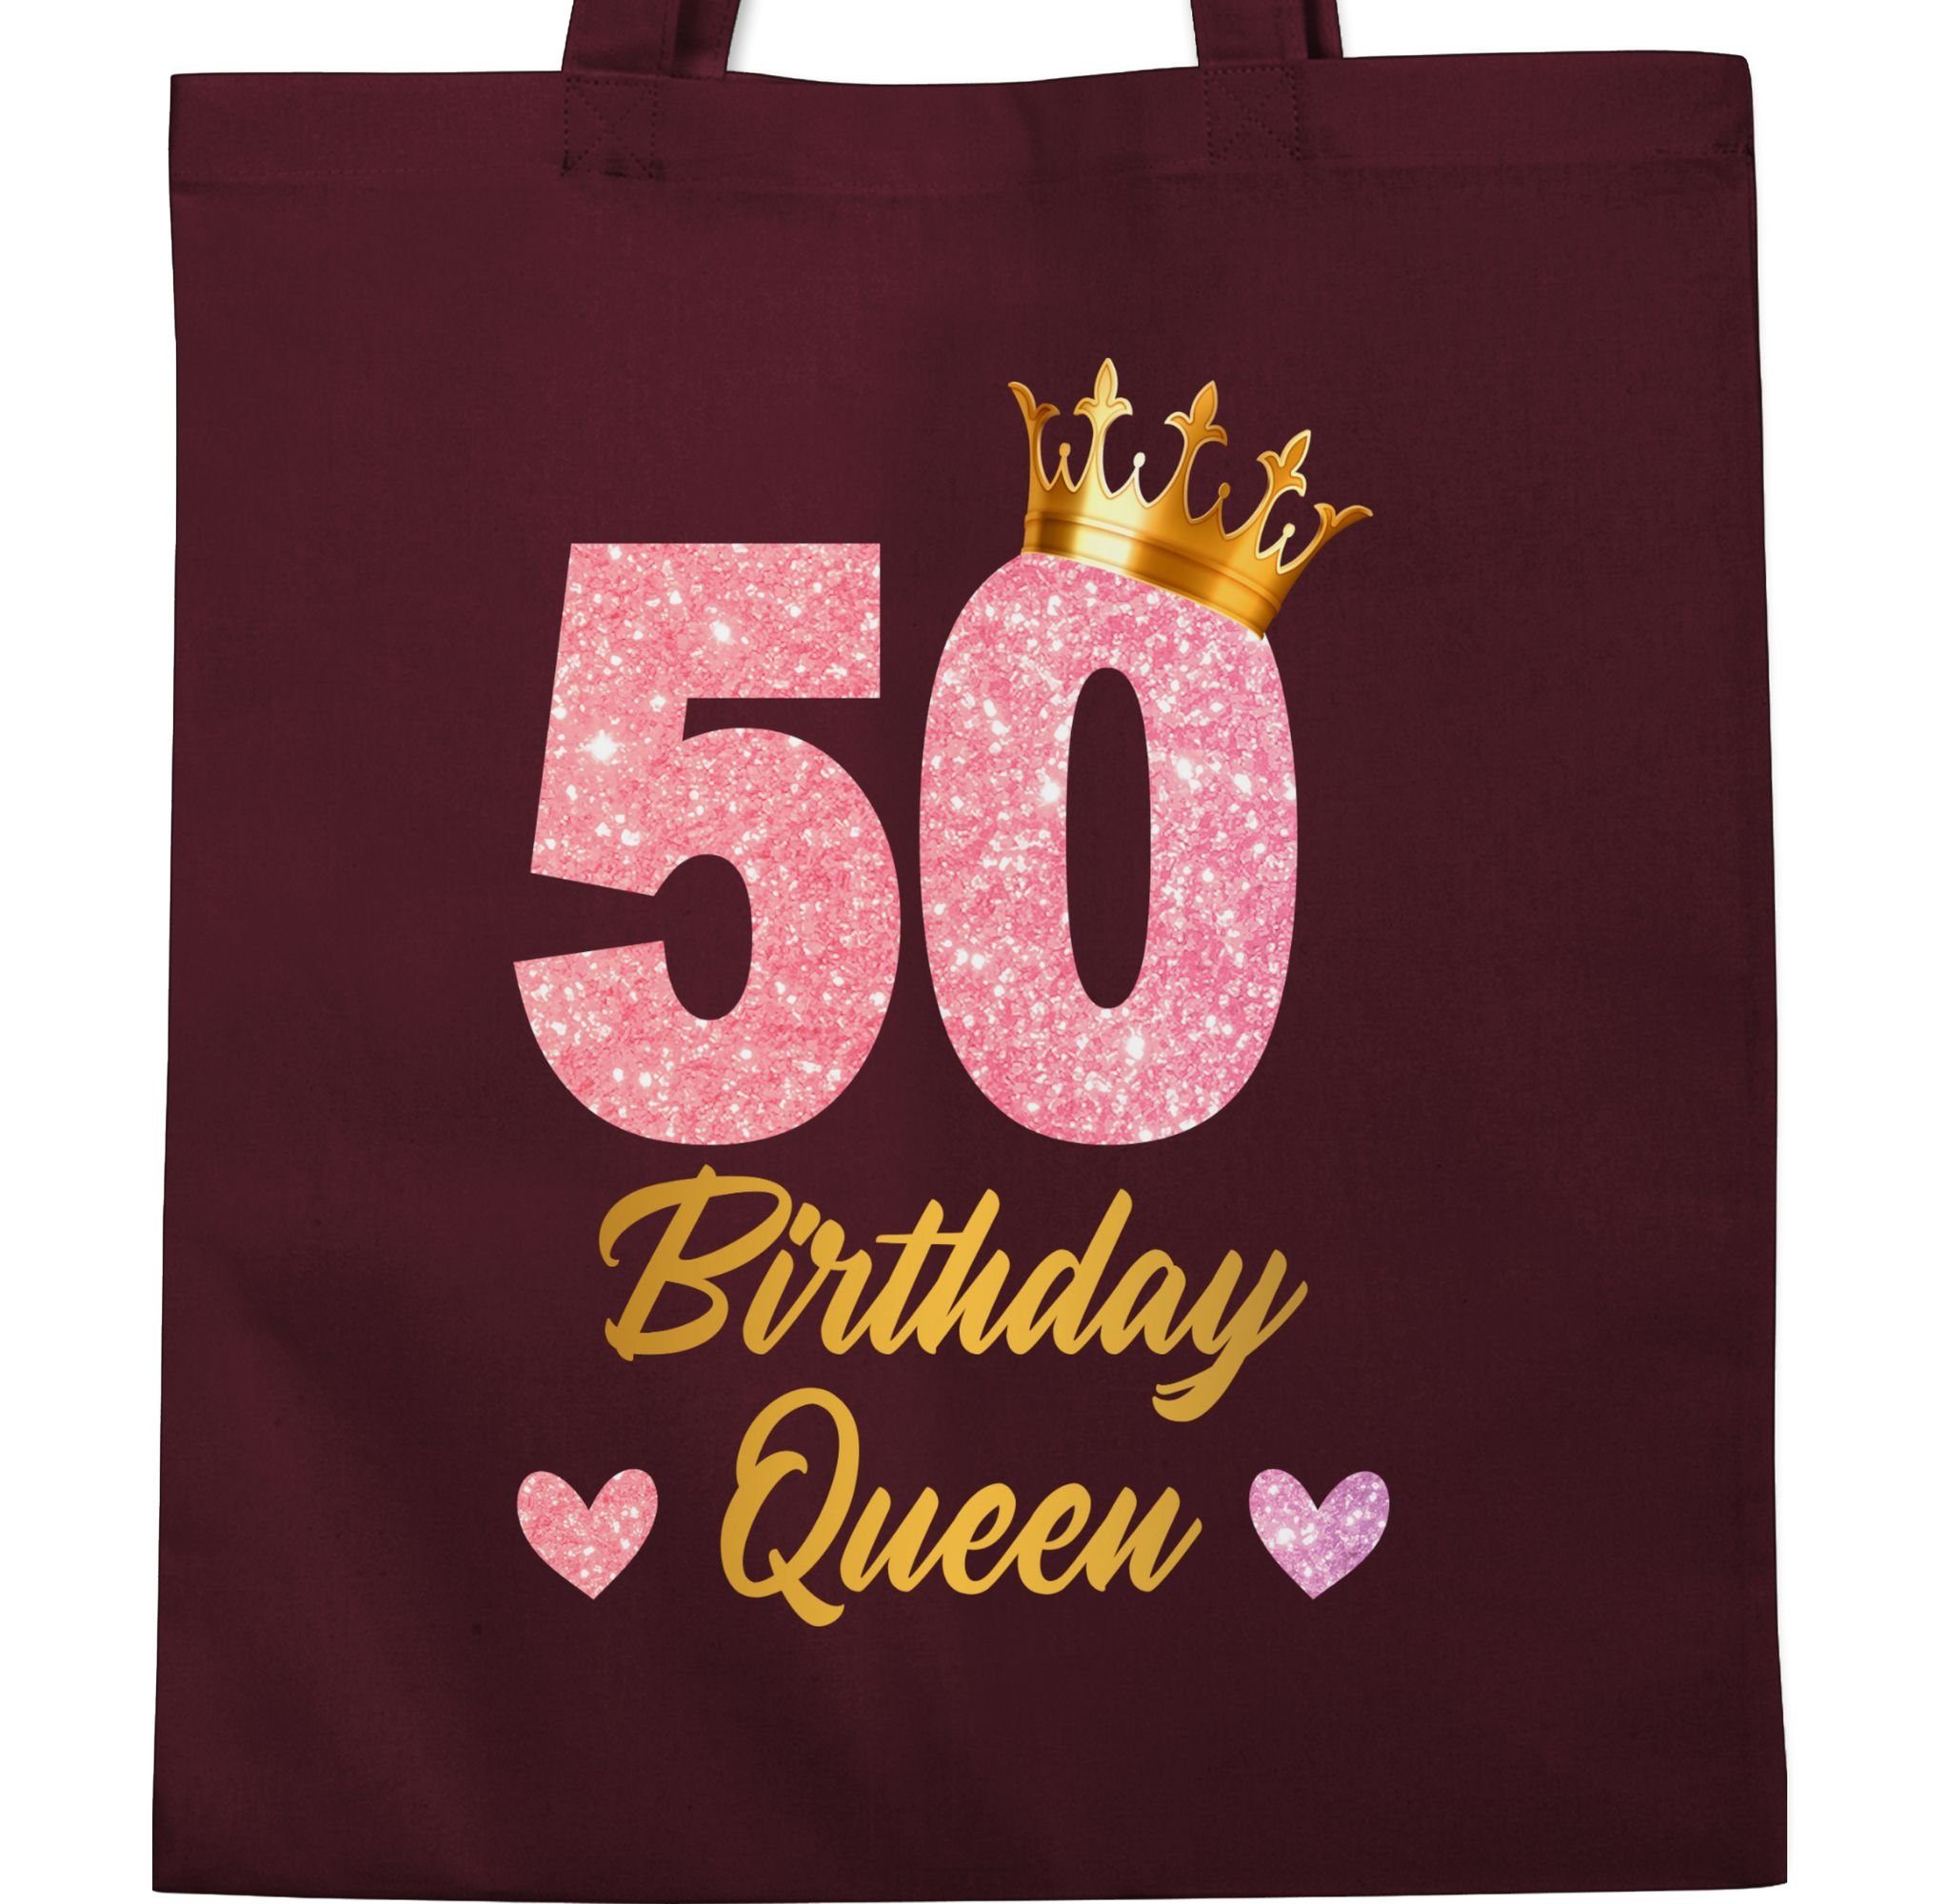 Geburtstag Geburtstagsgeschenk 2 50 50. Queen Königin Birthday Geburtstags Umhängetasche Bordeauxrot Shirtracer 50,